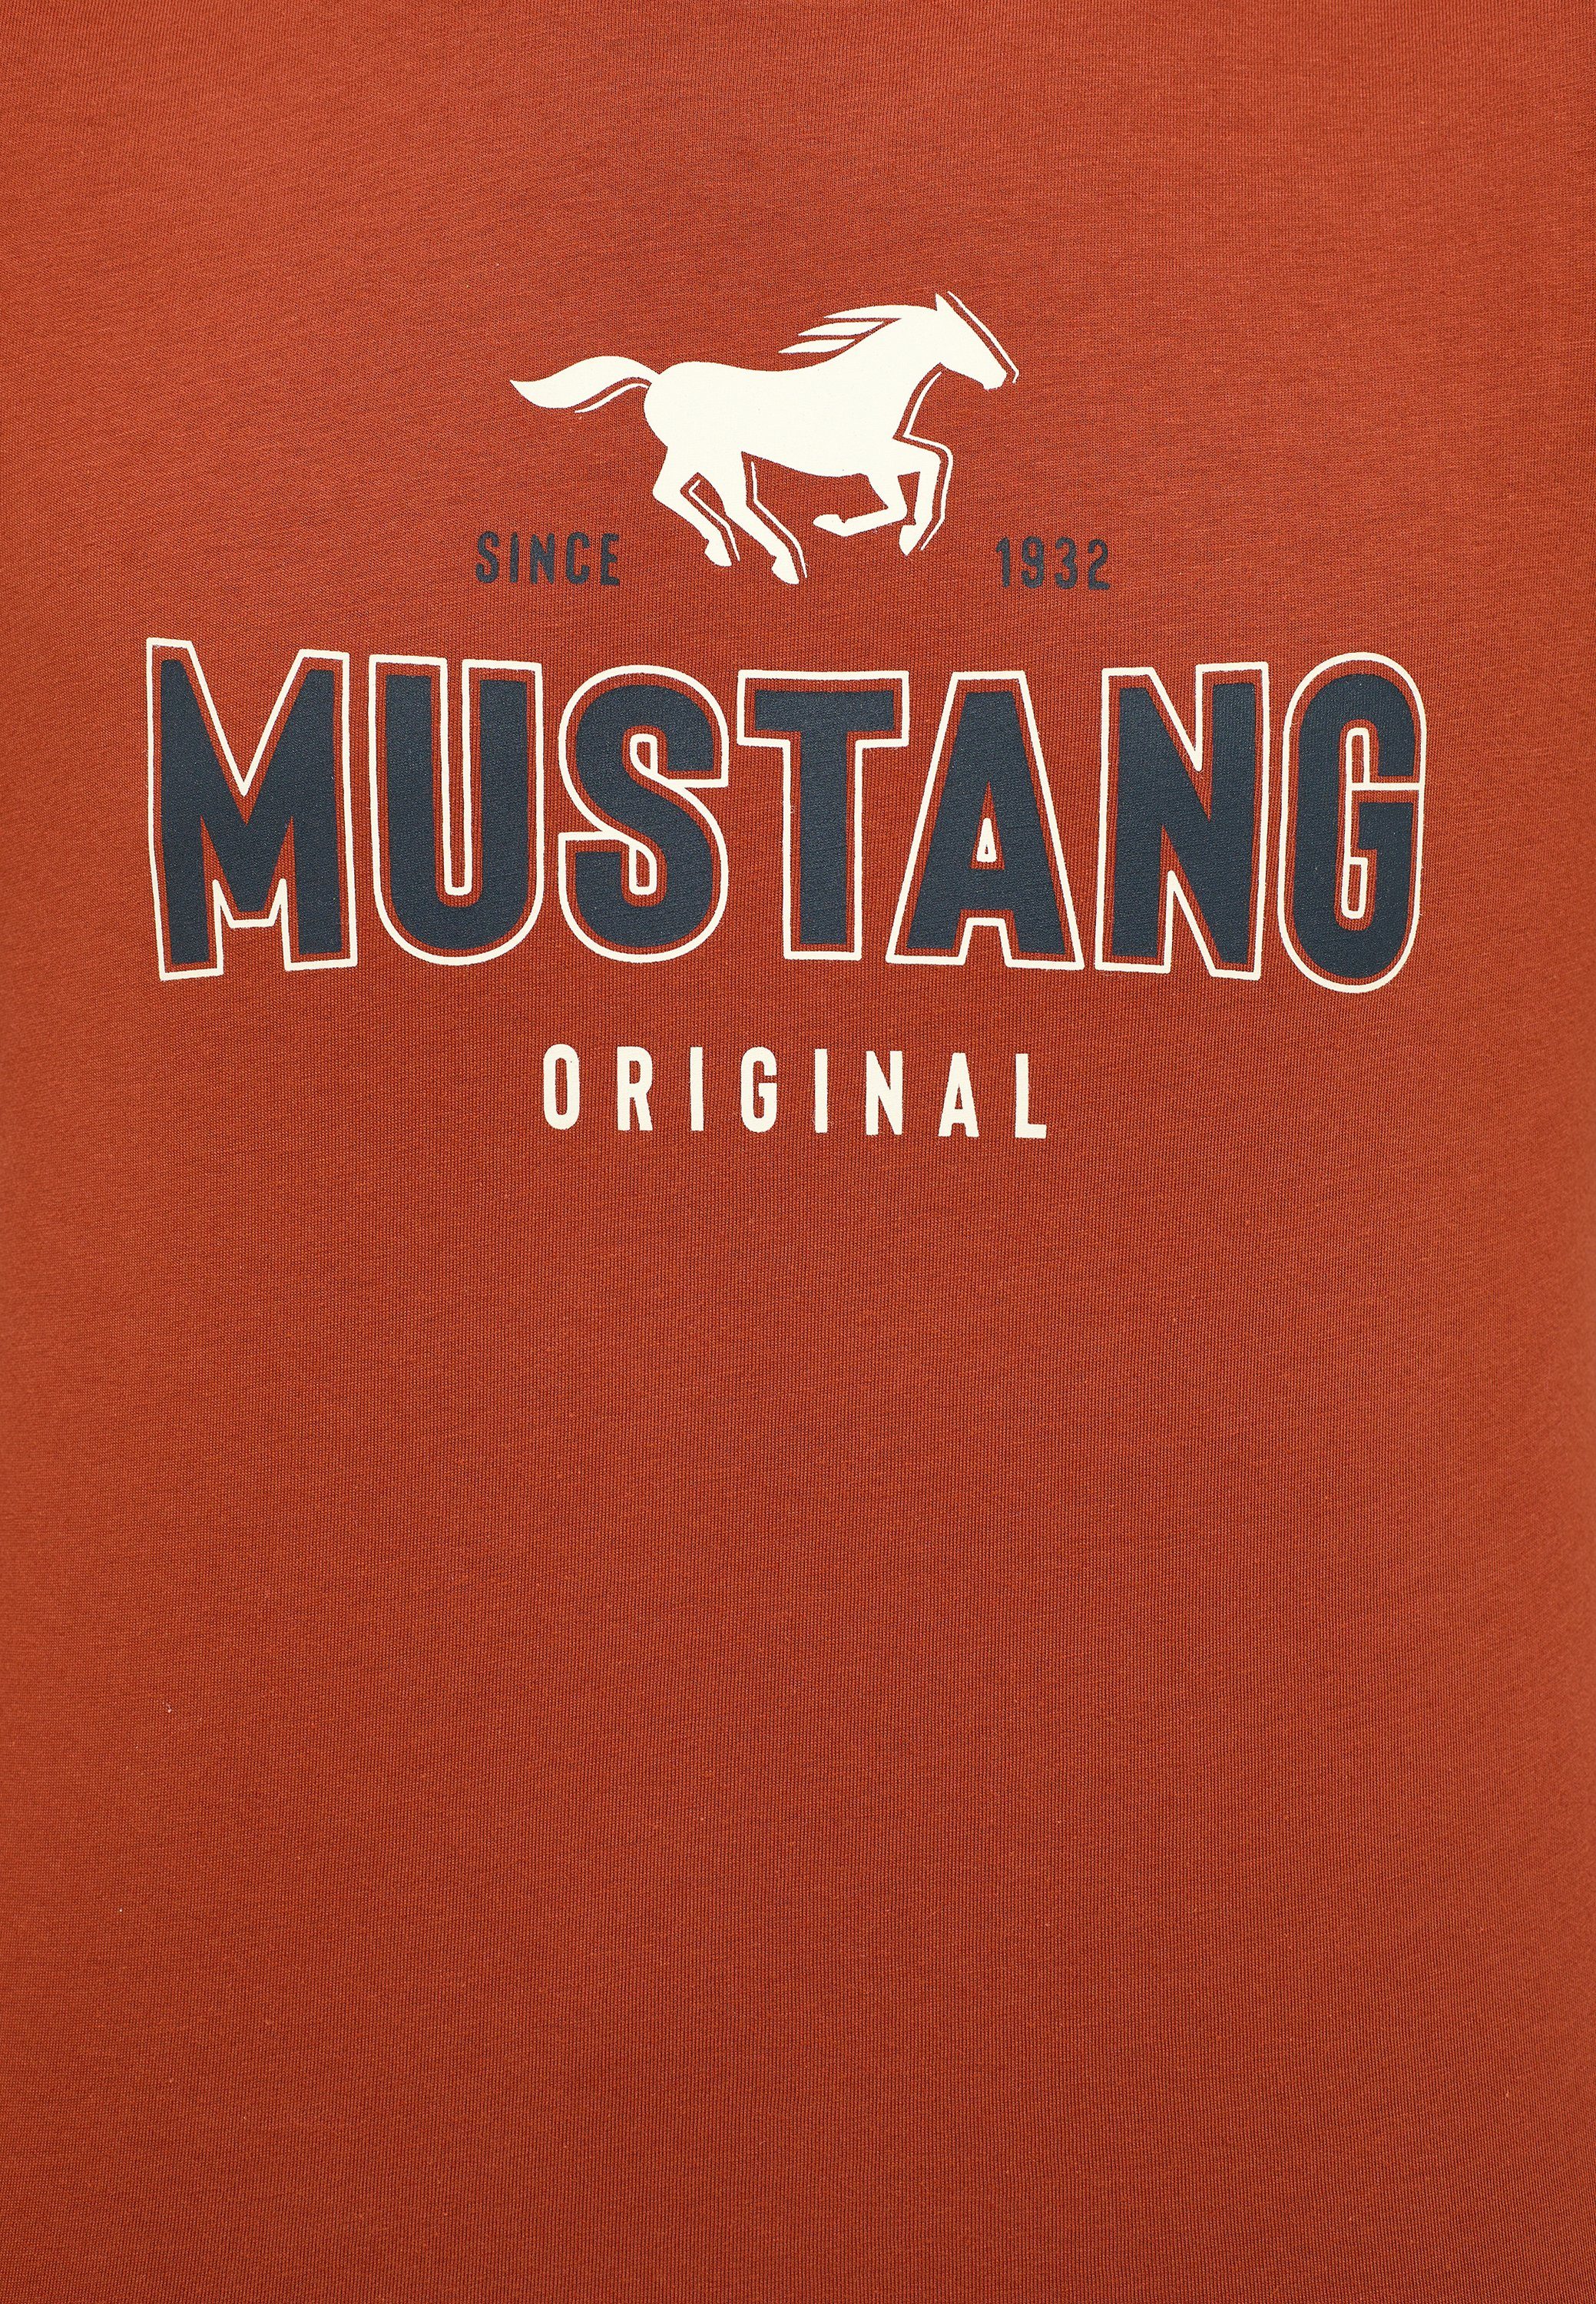 MUSTANG Kurzarmshirt Mustang braun Print-Shirt